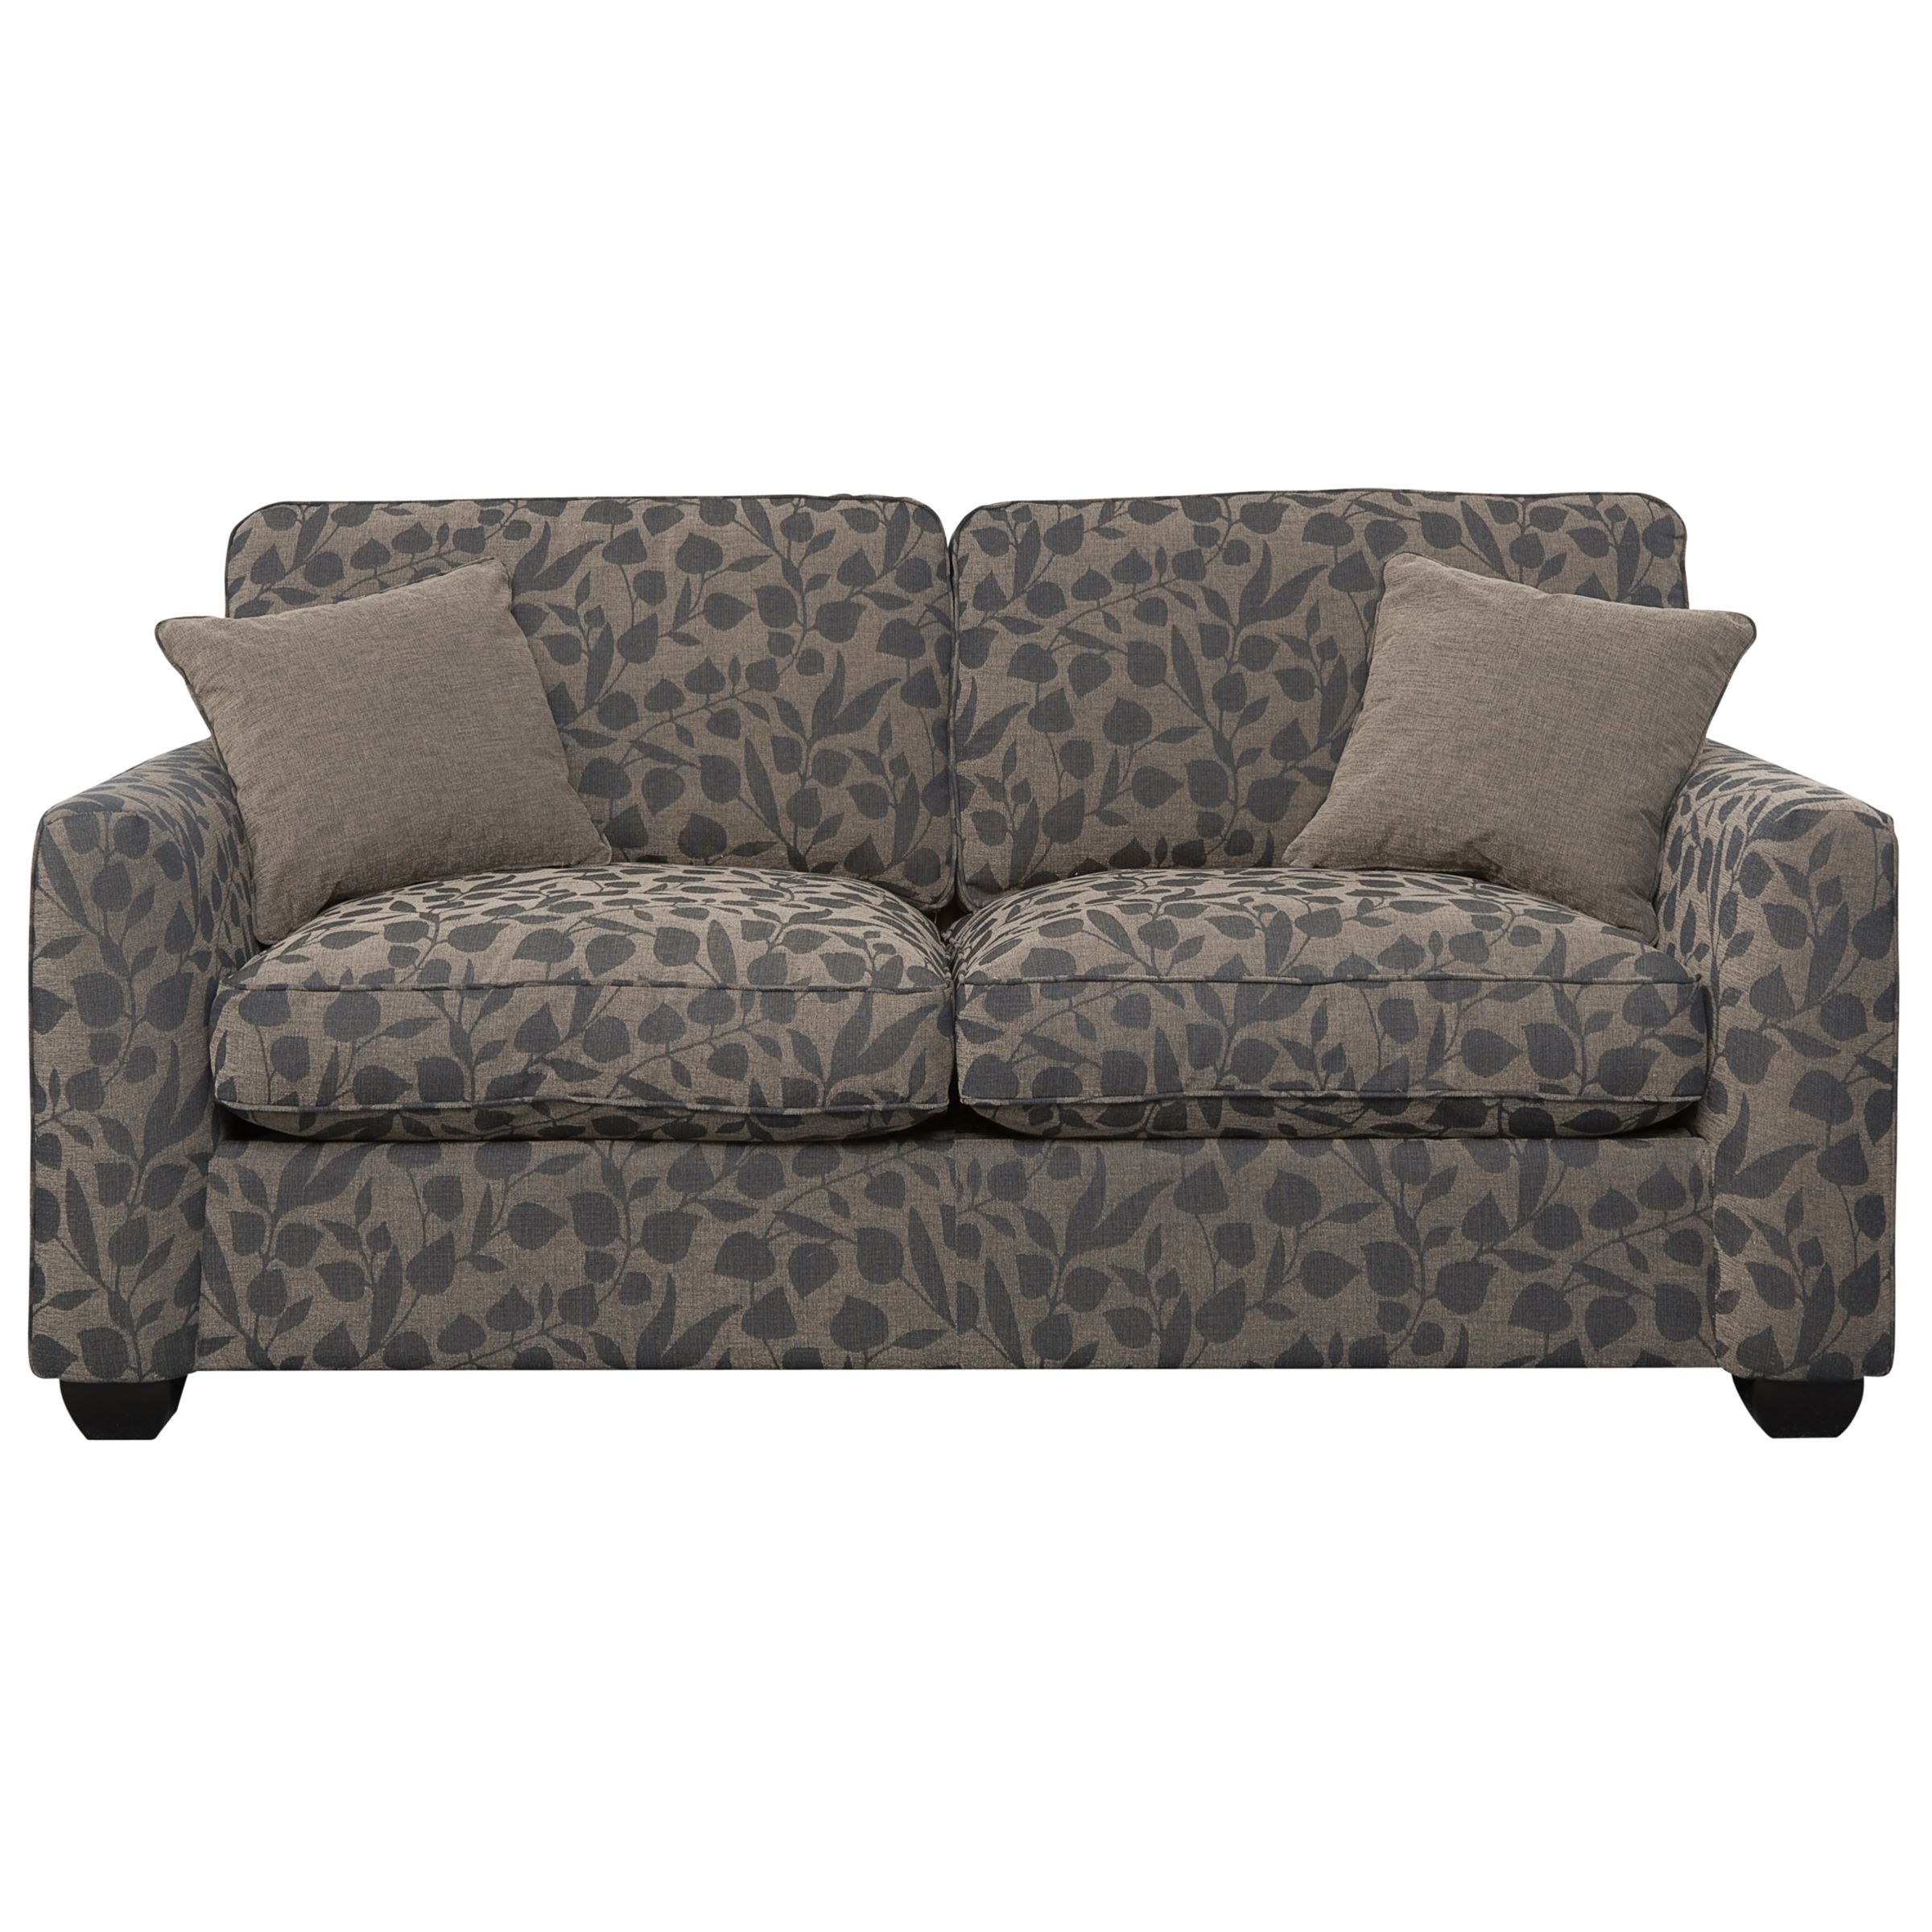 John Lewis Walton Medium Sofa Bed, Mole Leaf